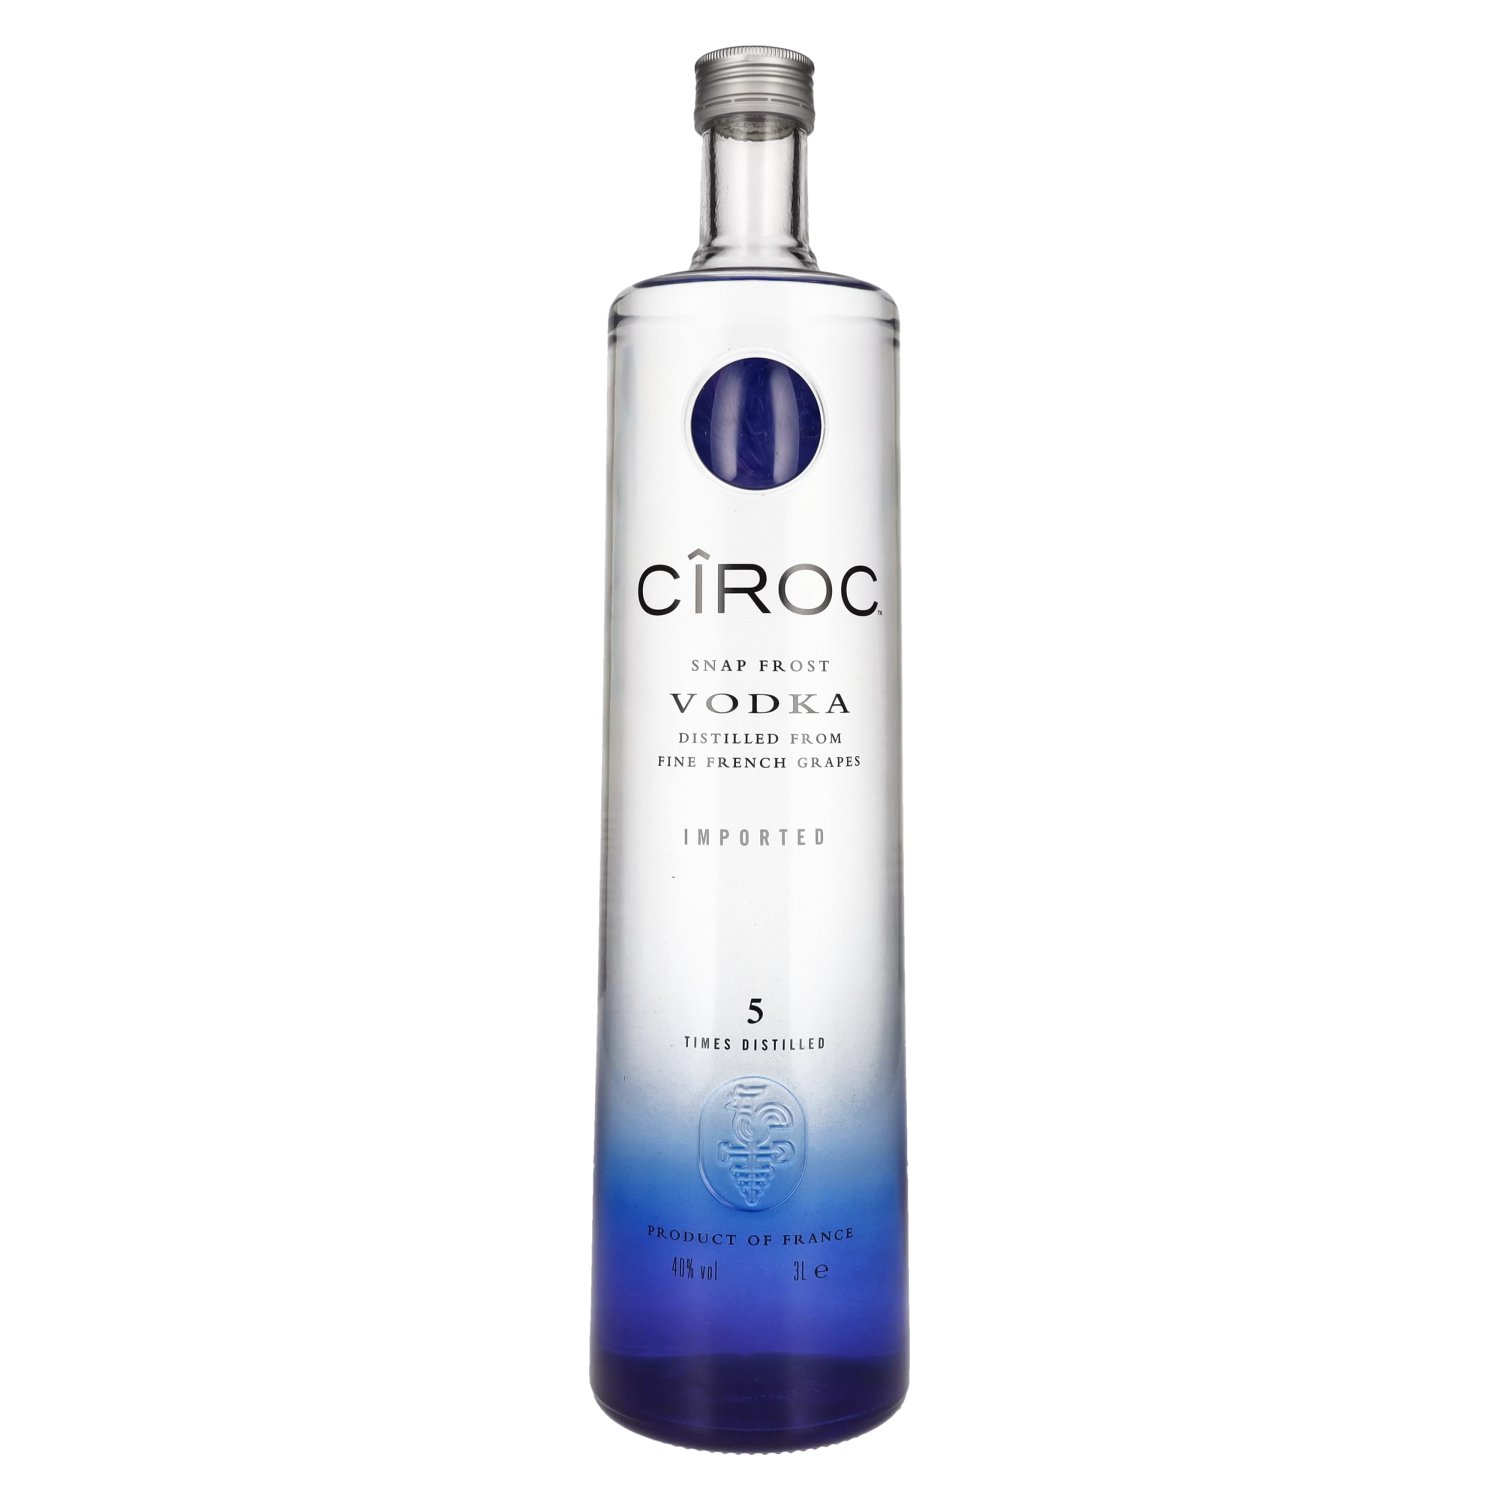 Cîroc SNAP FROST Vodka delicando Vol. 40% - 3l